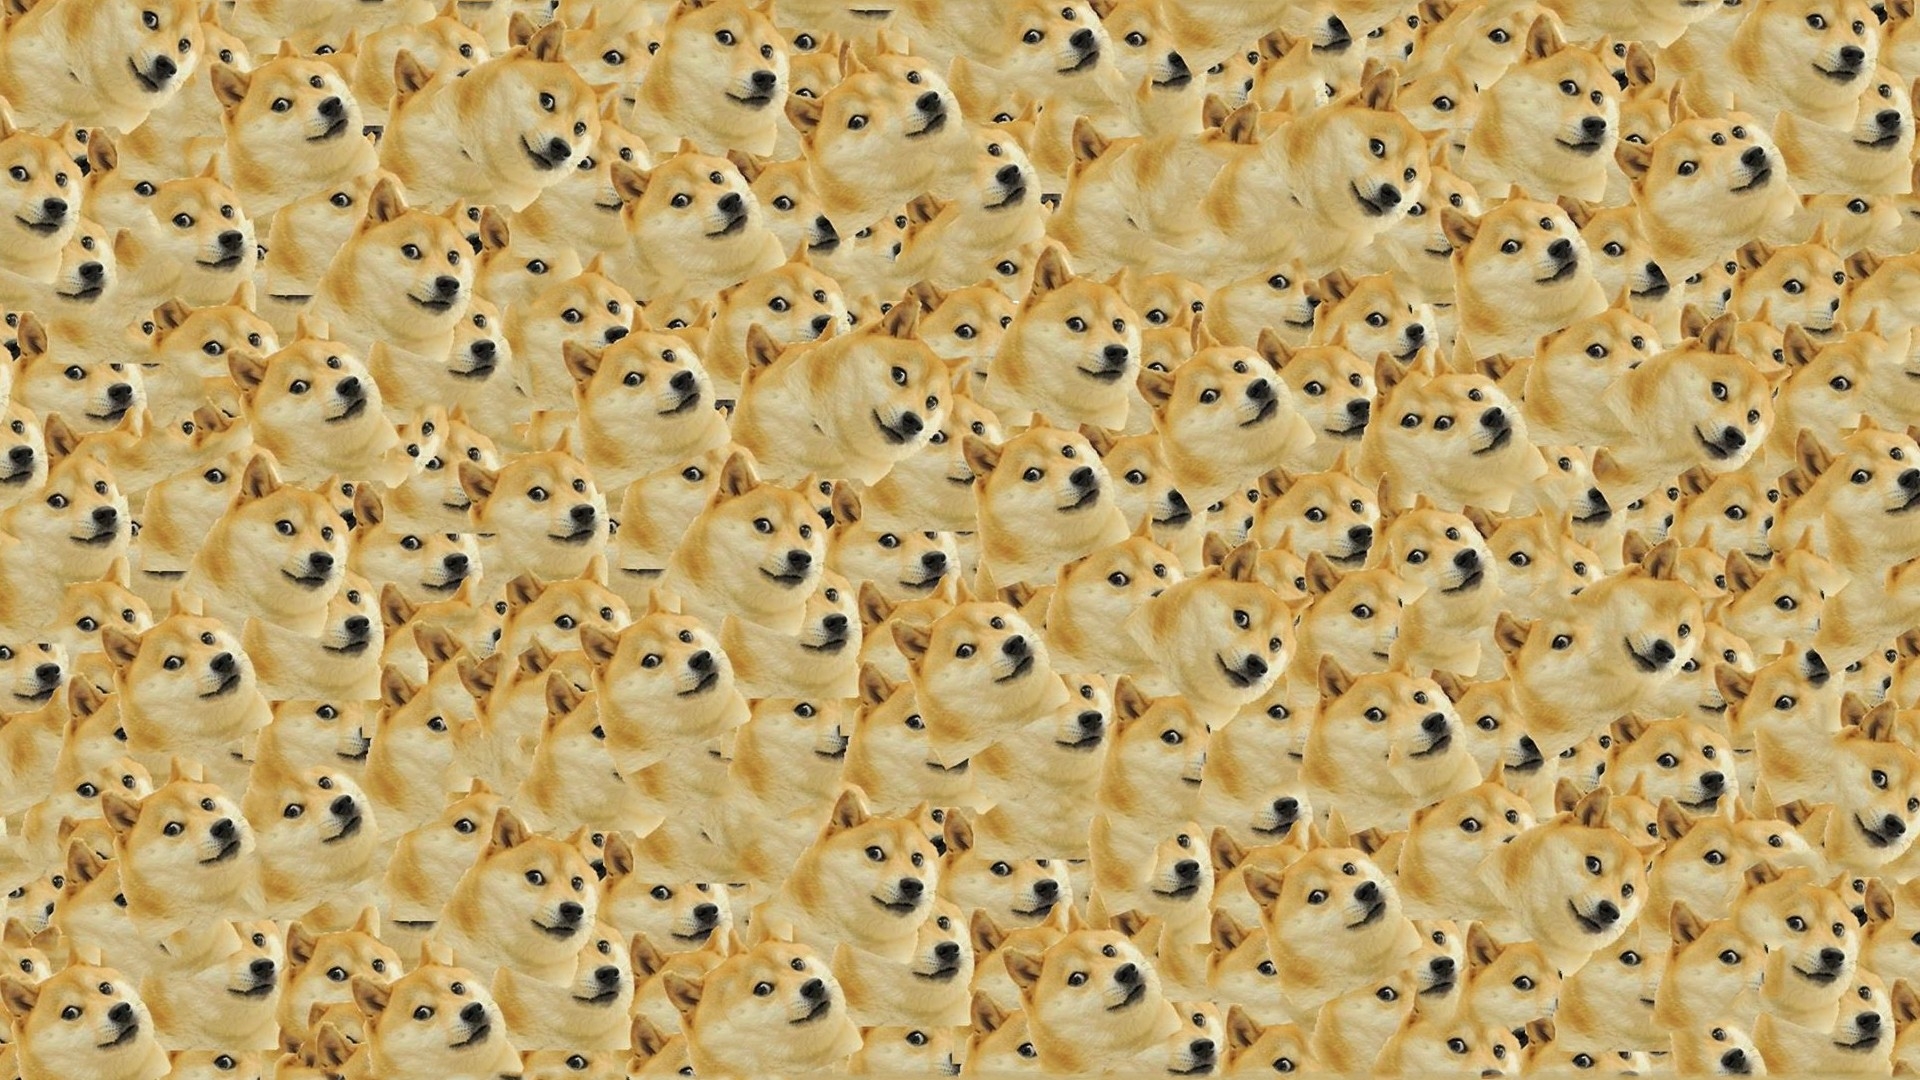 Its full of Doge Doge Wallpaper 1920x1080